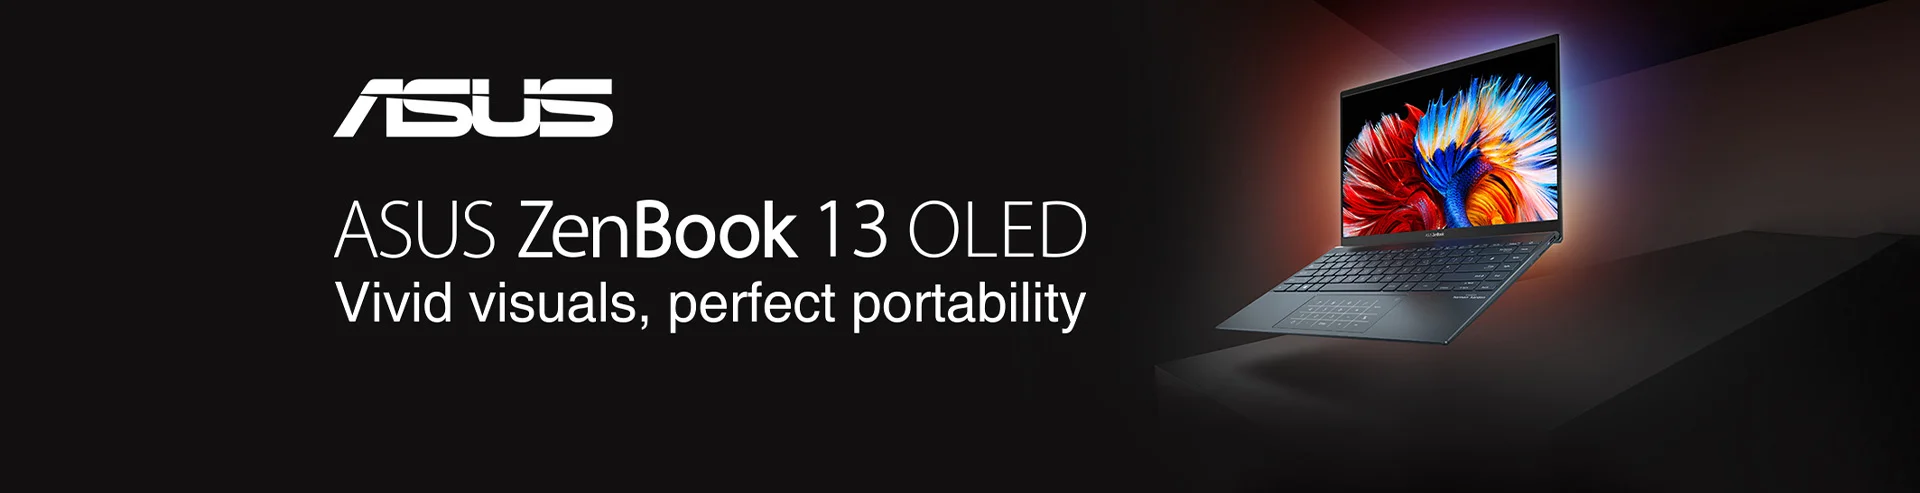 Full-Width-Large-Asus-ZenBook-13-OLED-Desktop.webp